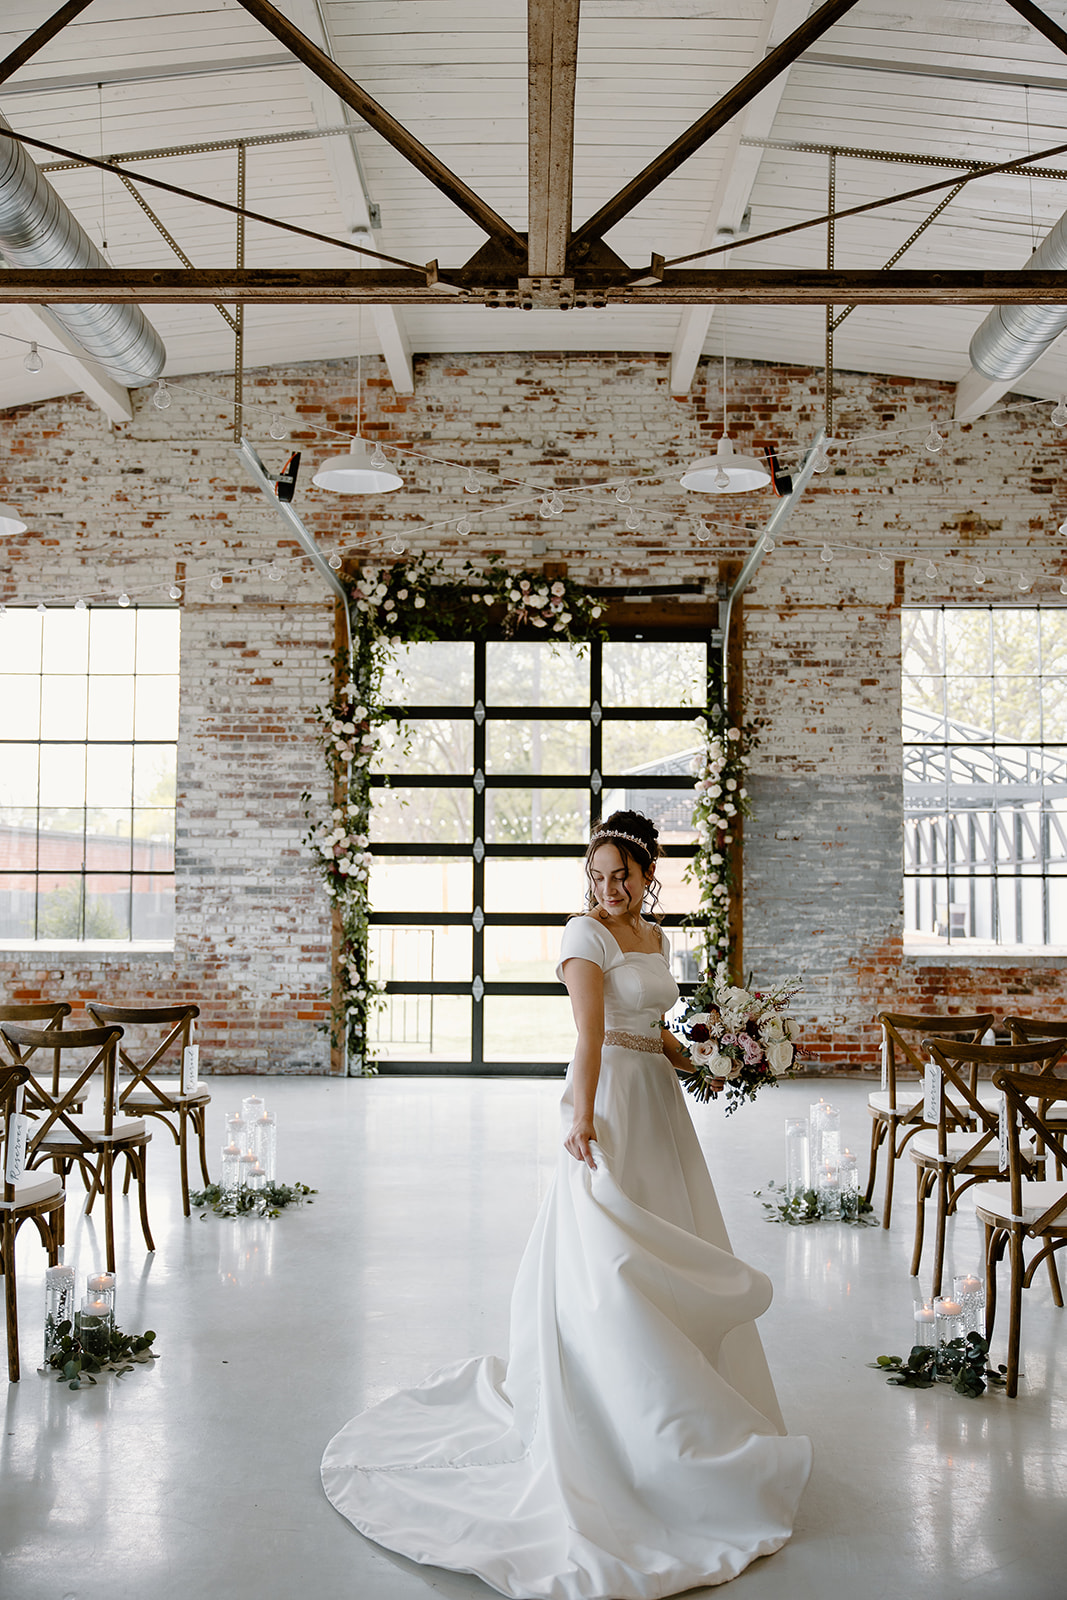 Bridal portraits The Graham Mill, a North Carolina wedding venue, captured by NC wedding photographers and videographers